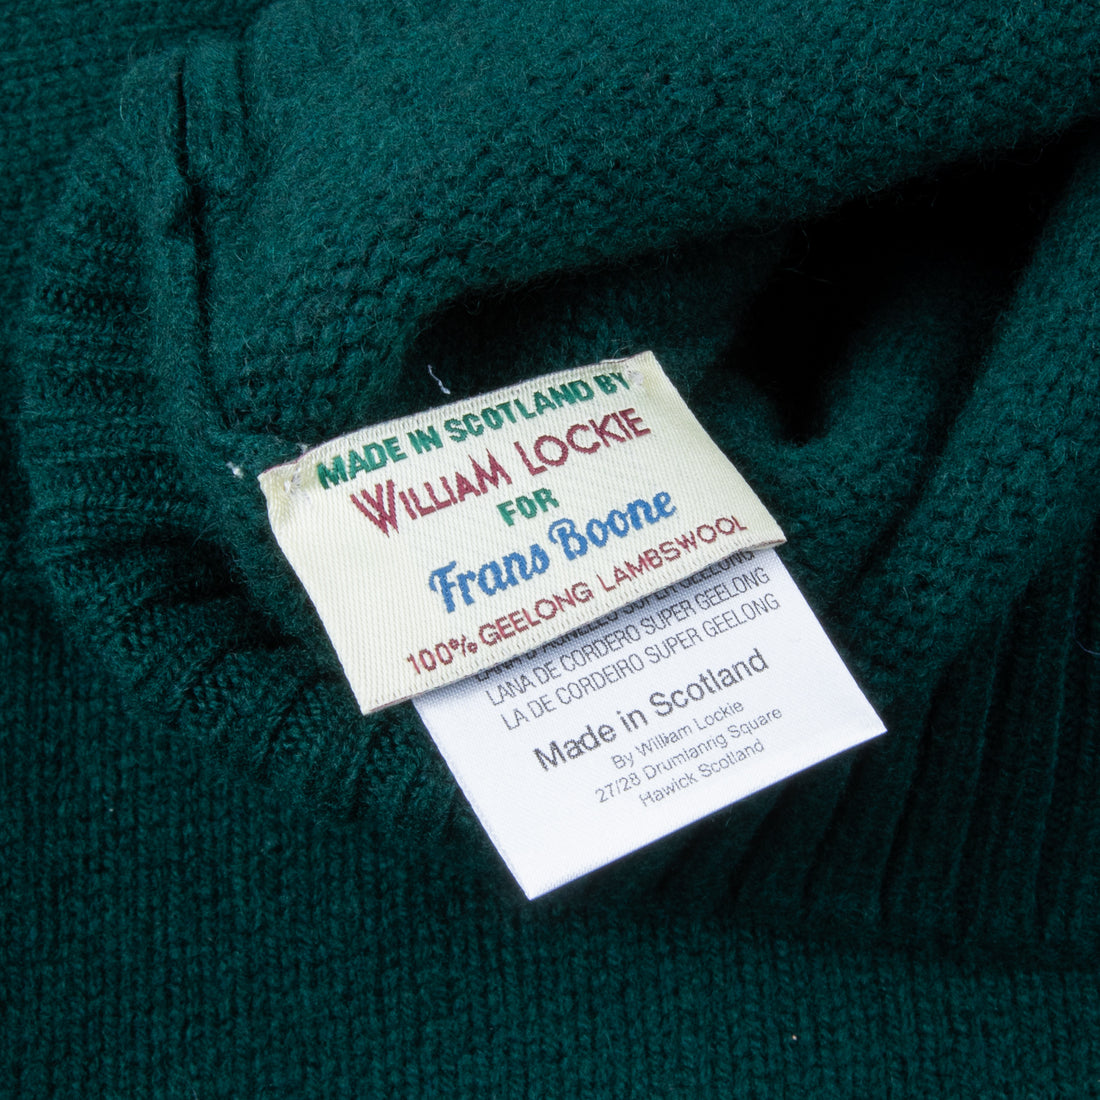 William Lockie x Frans Boone Super Geelong Vintage fit sweater